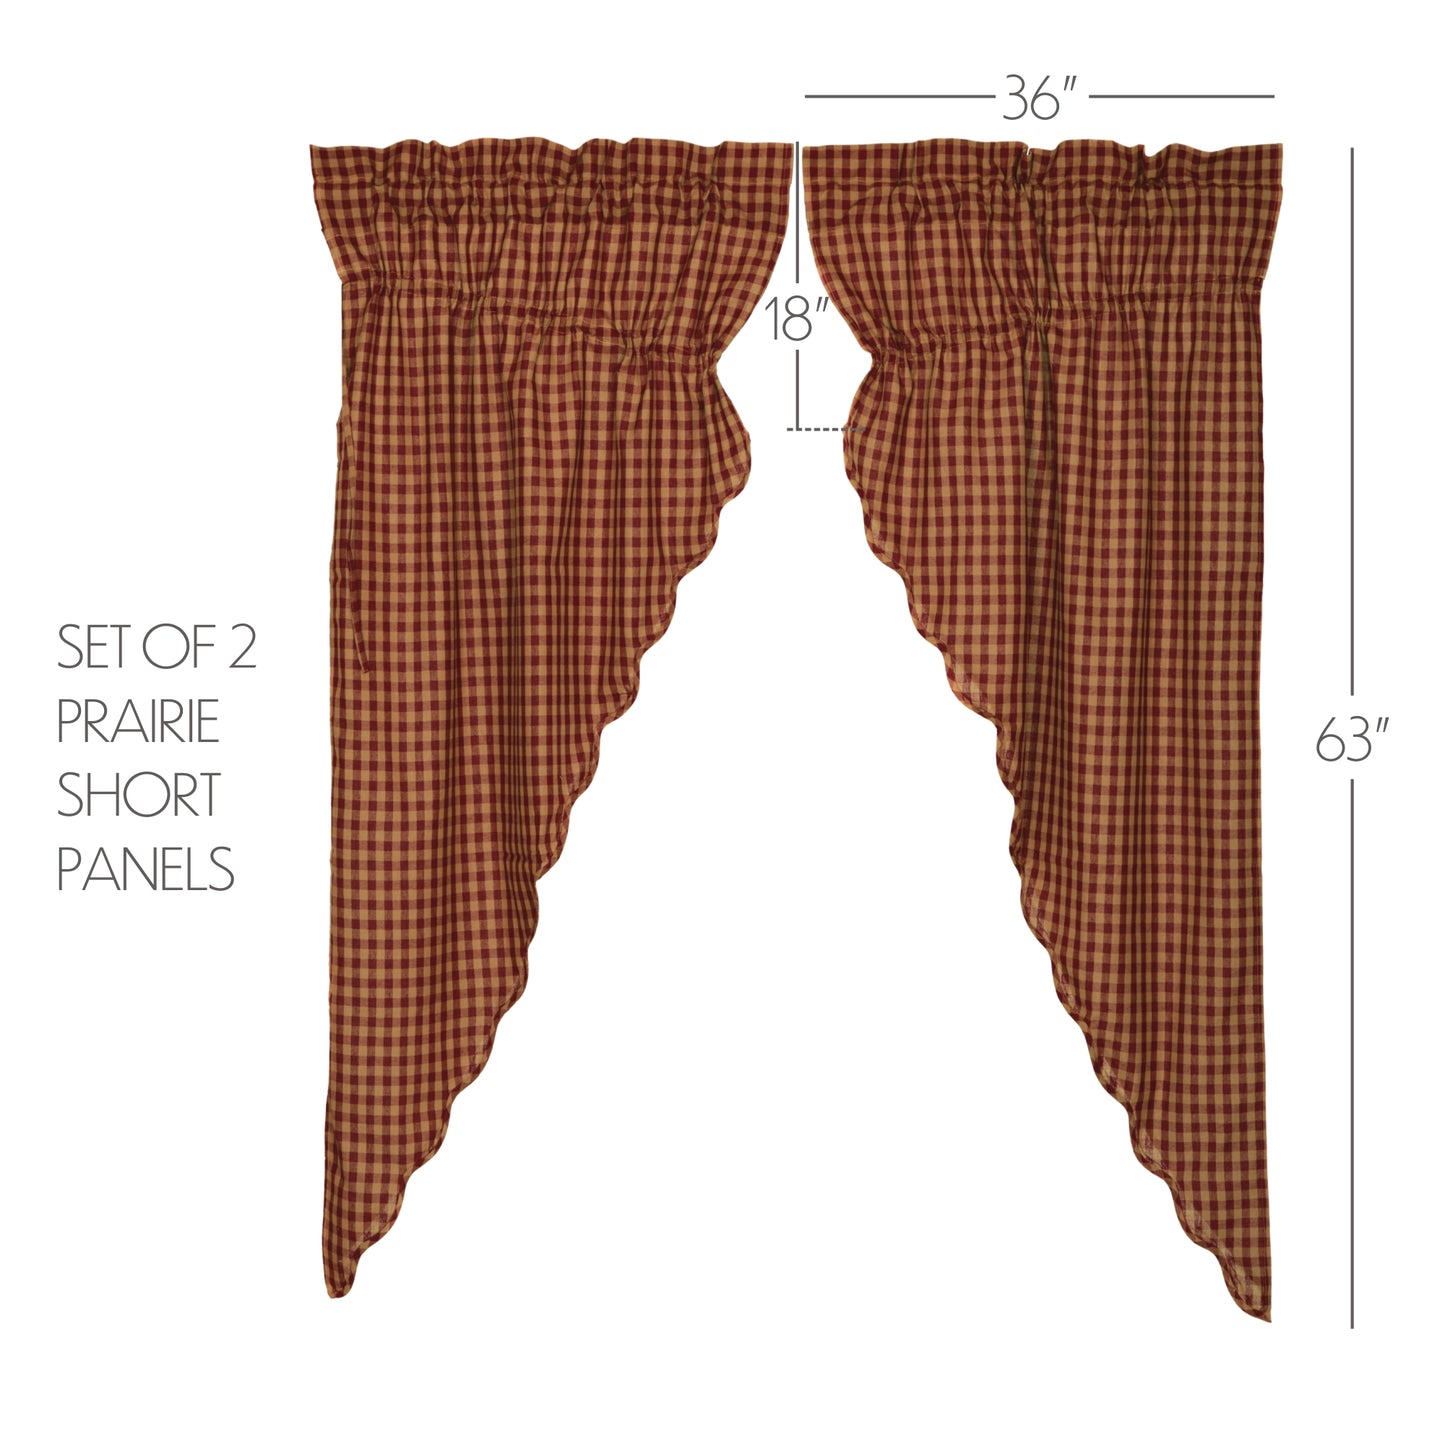 6100-Burgundy-Check-Scalloped-Prairie-Short-Panel-Set-of-2-63x36x18-image-1